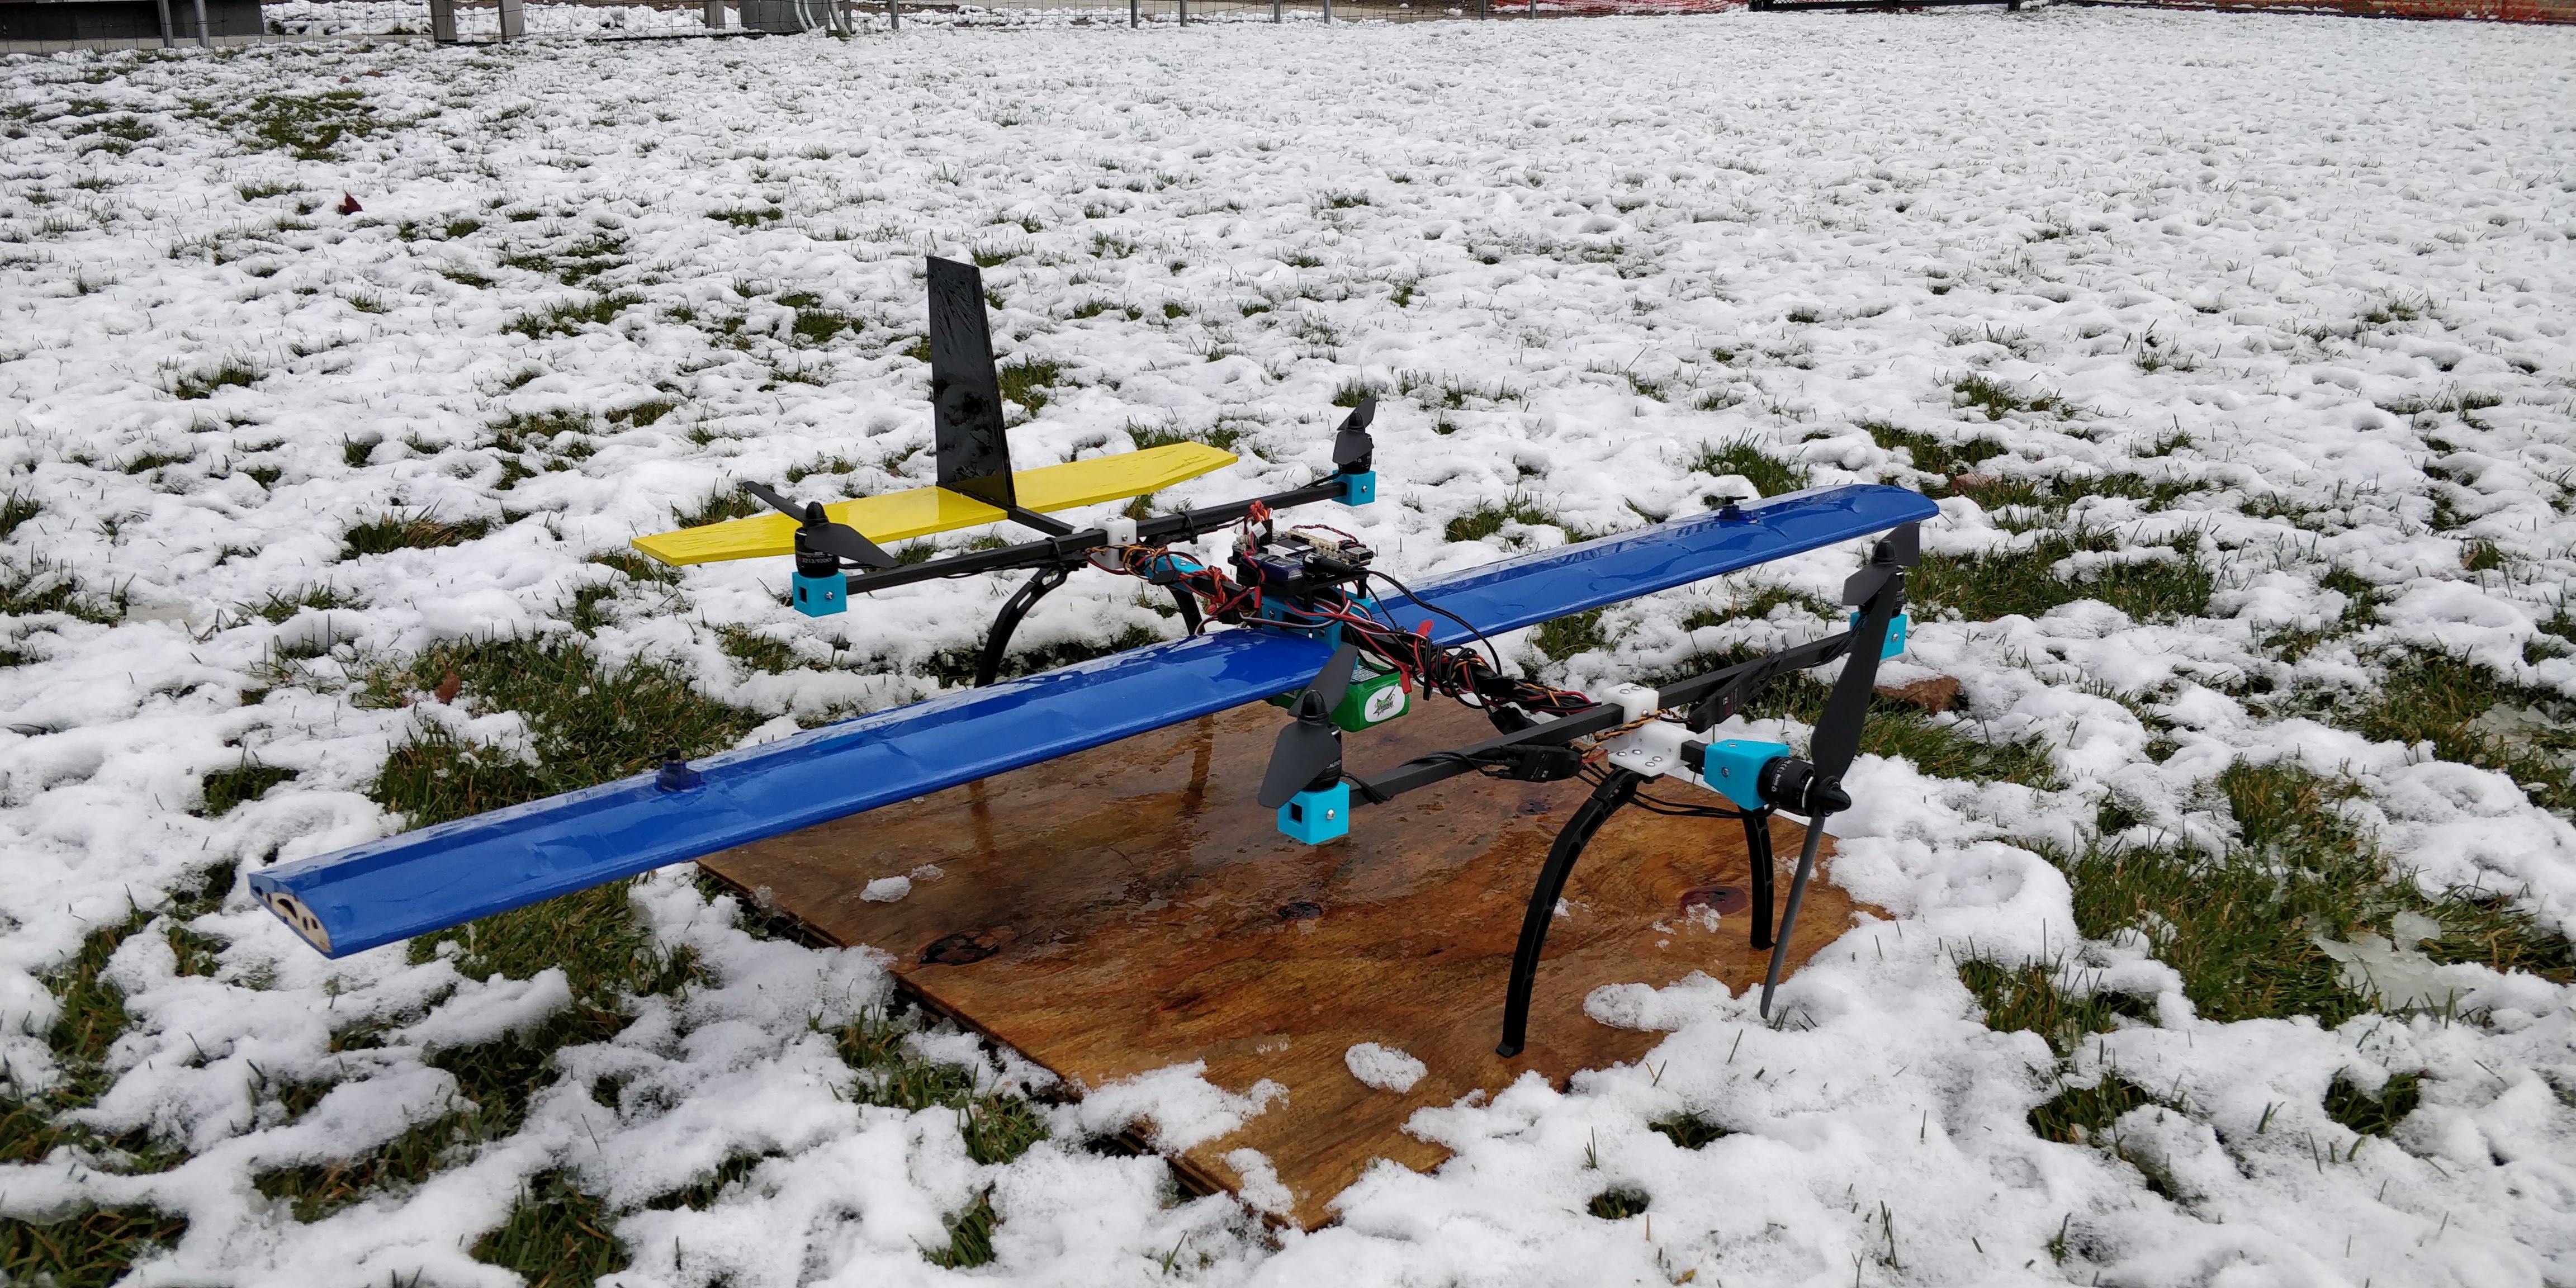 quadplane on wood on snowy grass